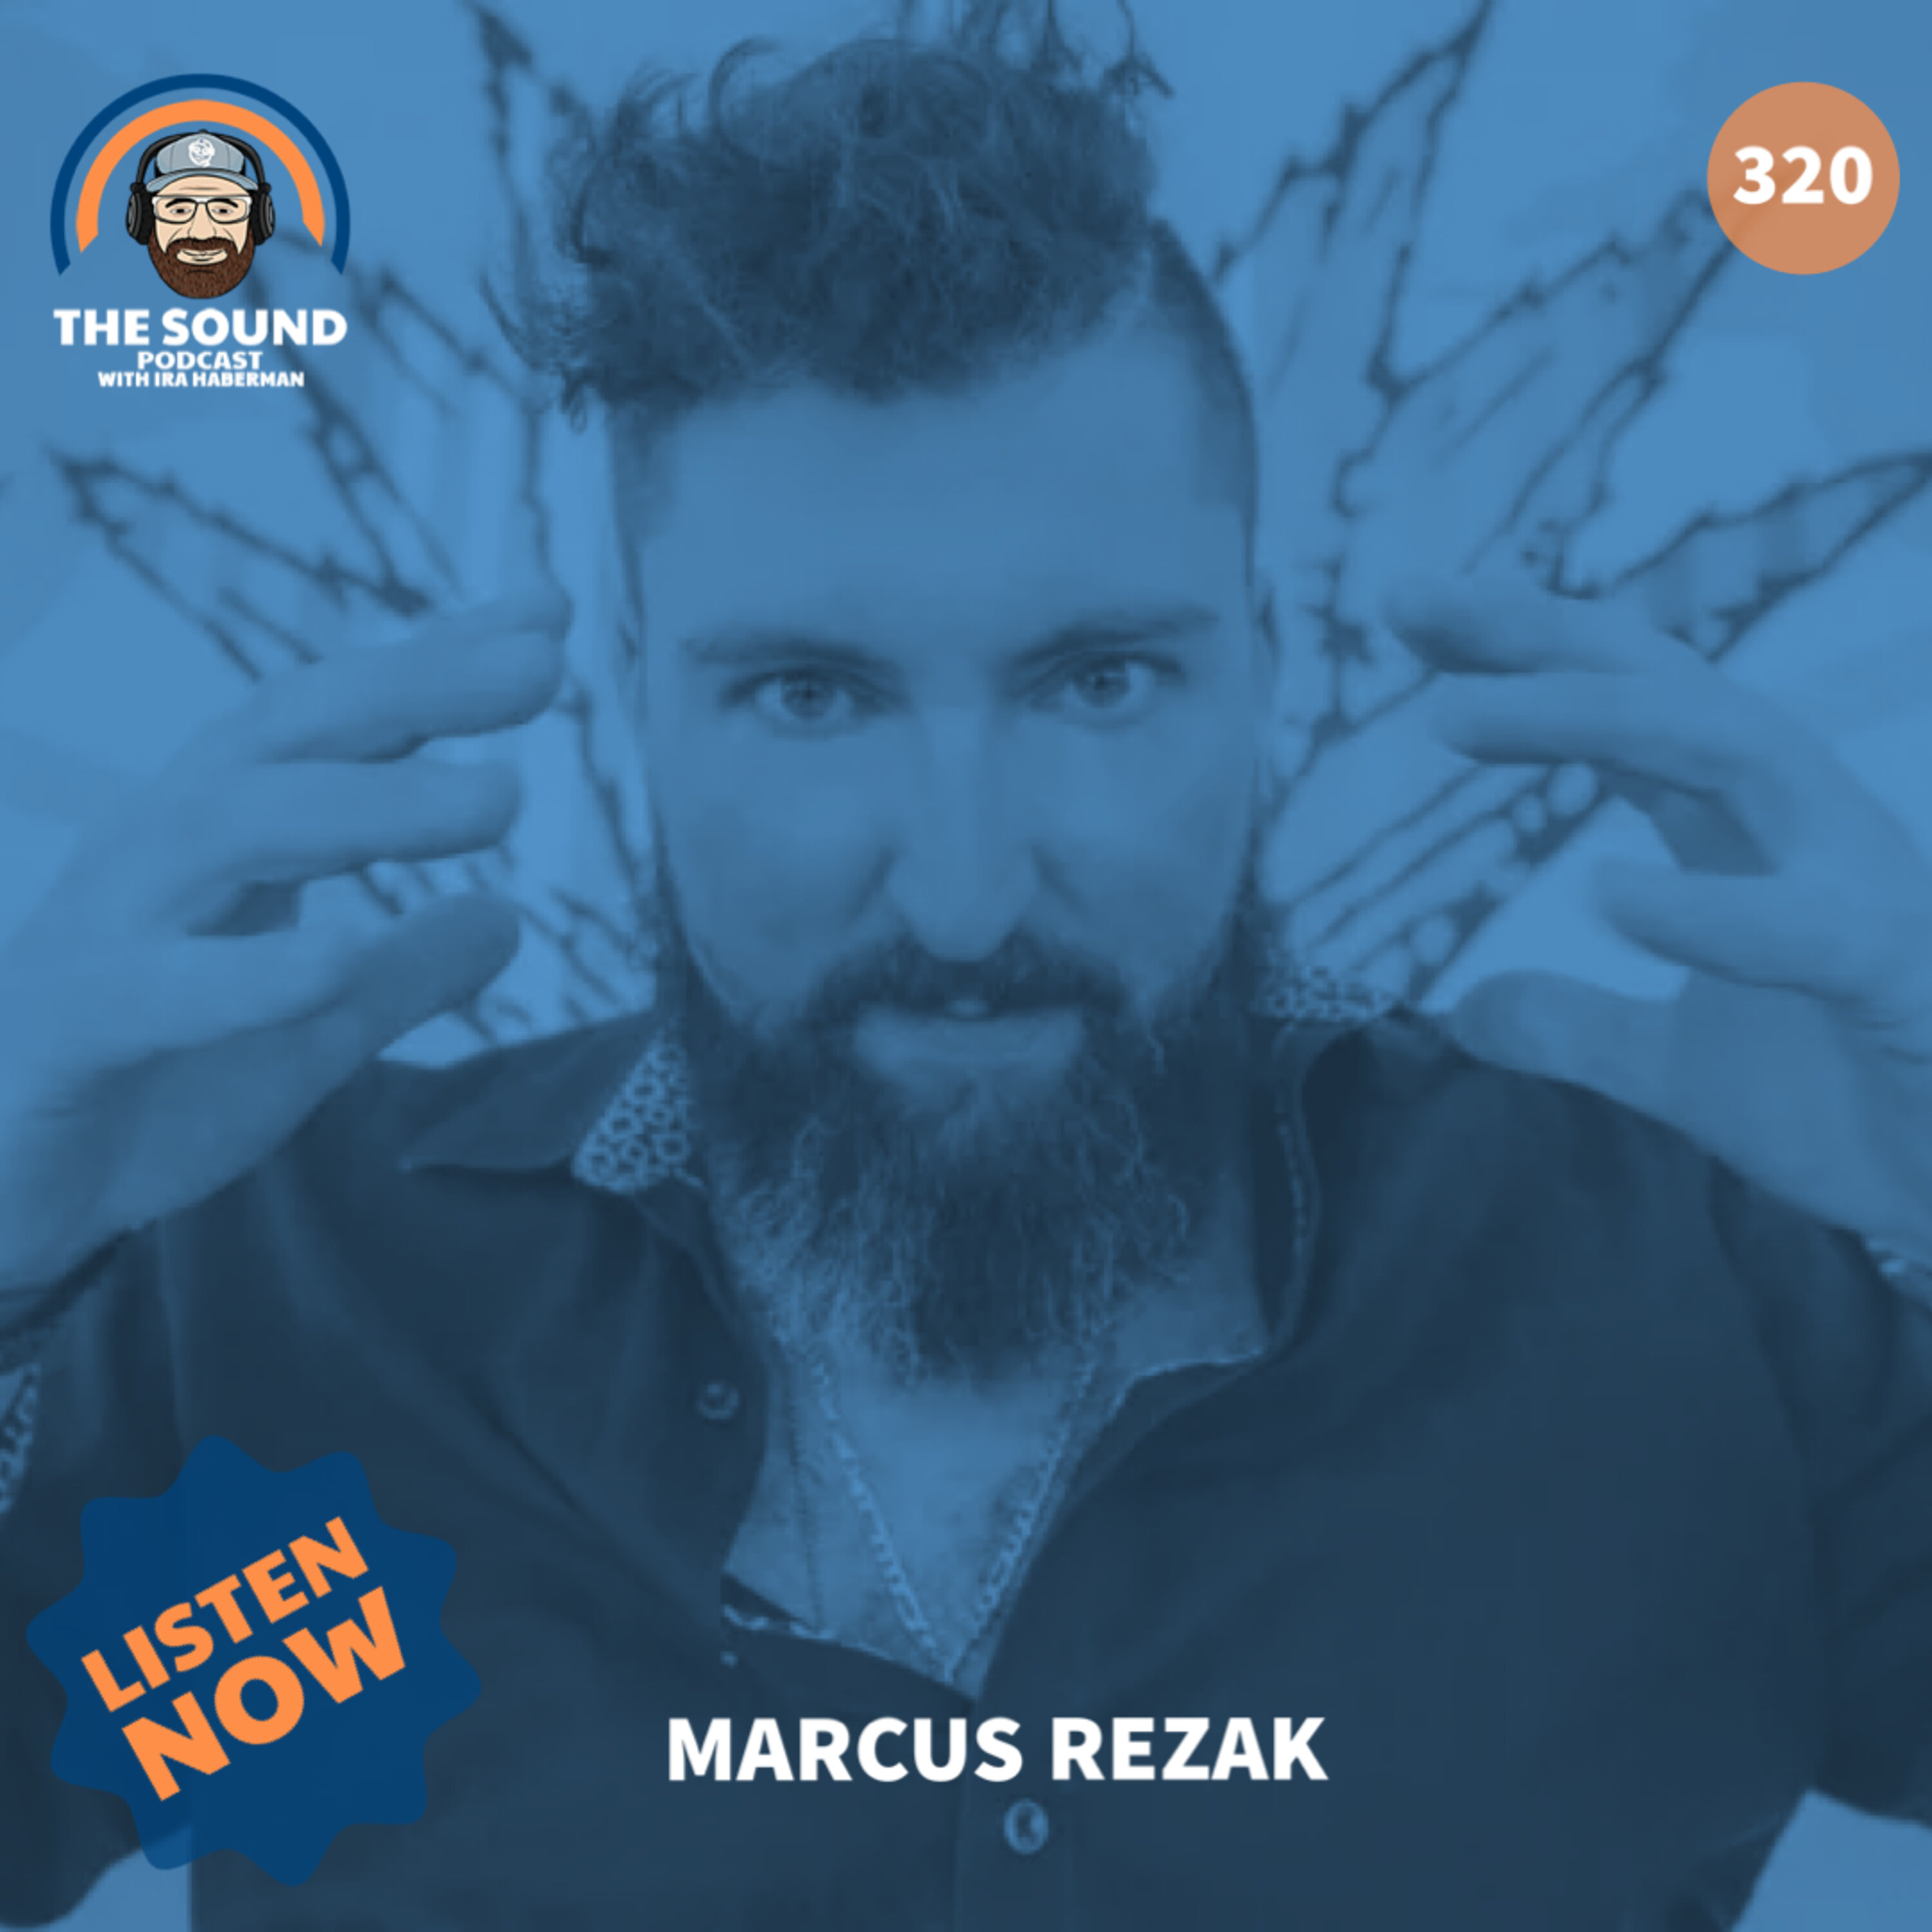 Marcus Rezak